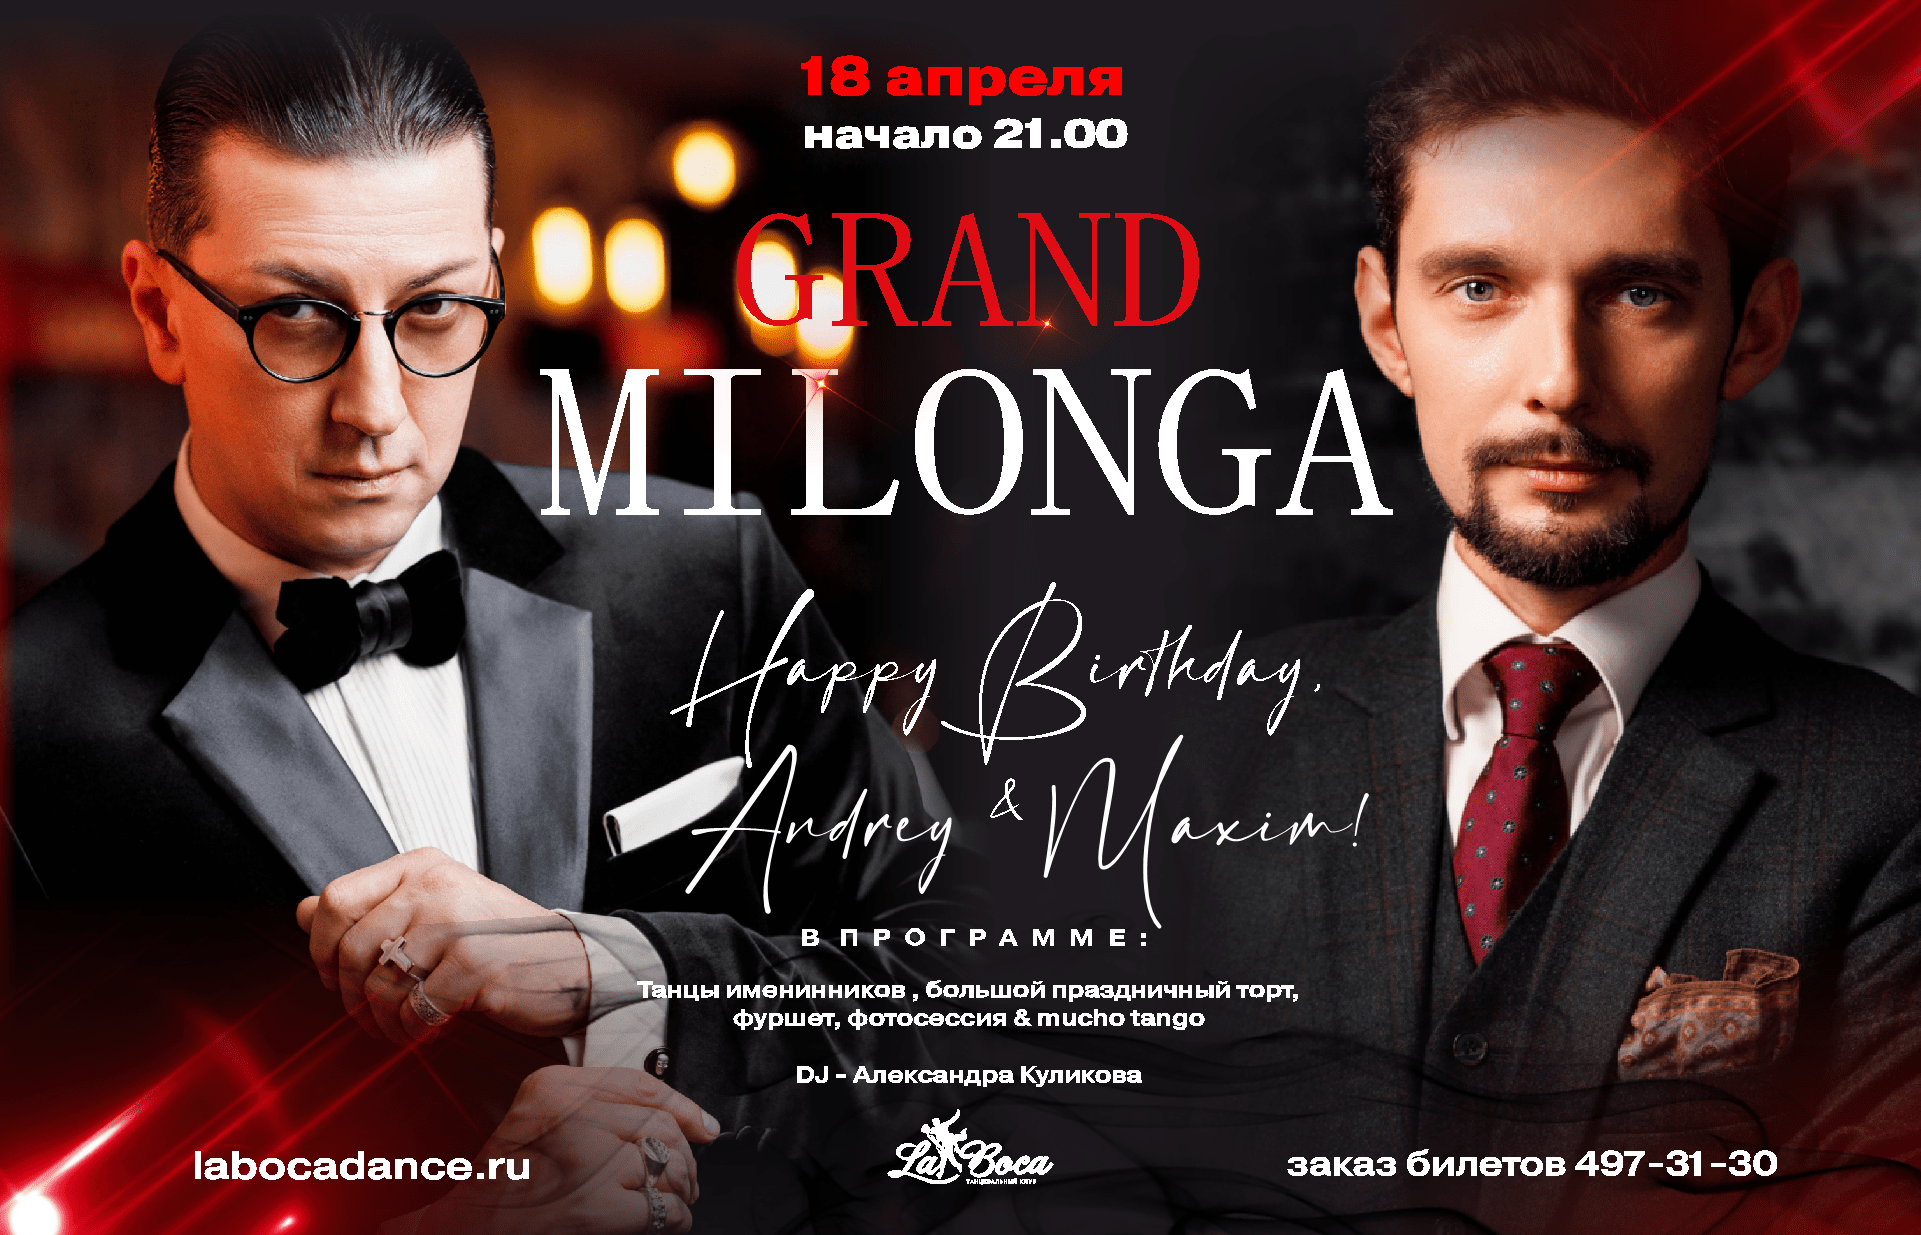 Grand Milonga. Happy Birthday Andrey&Maxim